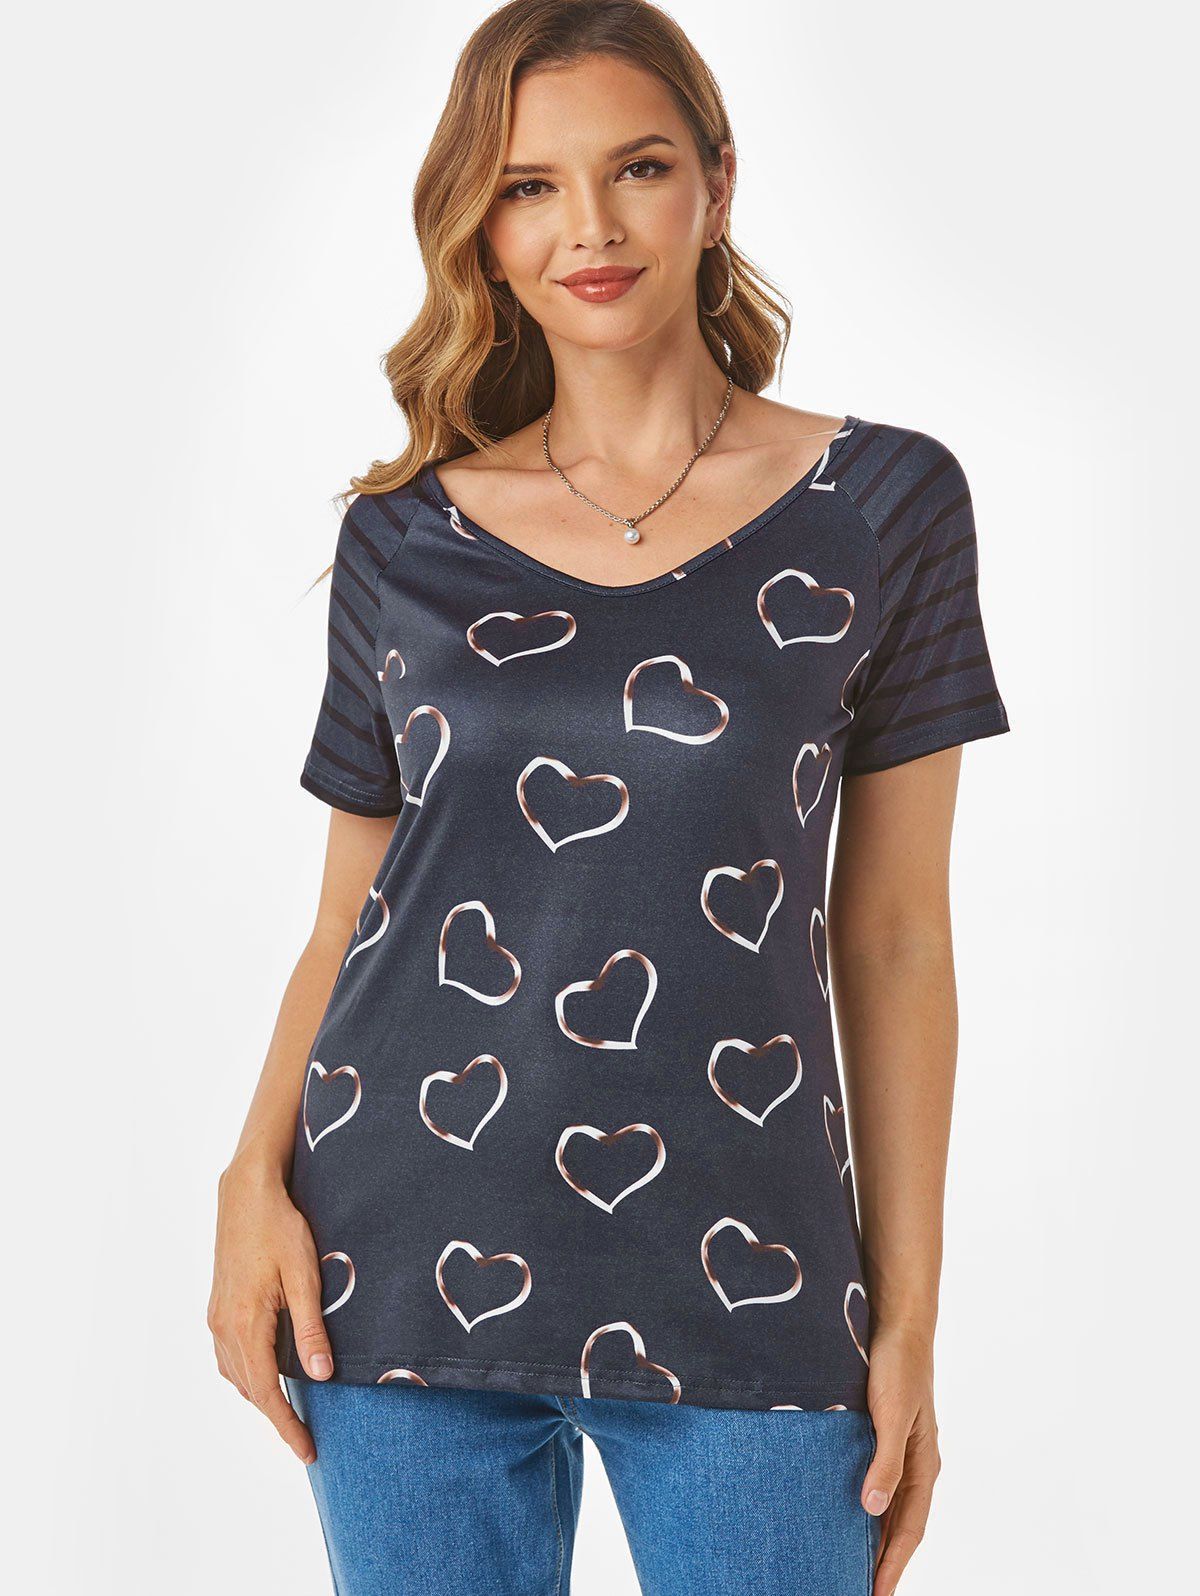 Heart Striped Raglan Sleeve T Shirt - BLACK 2XL